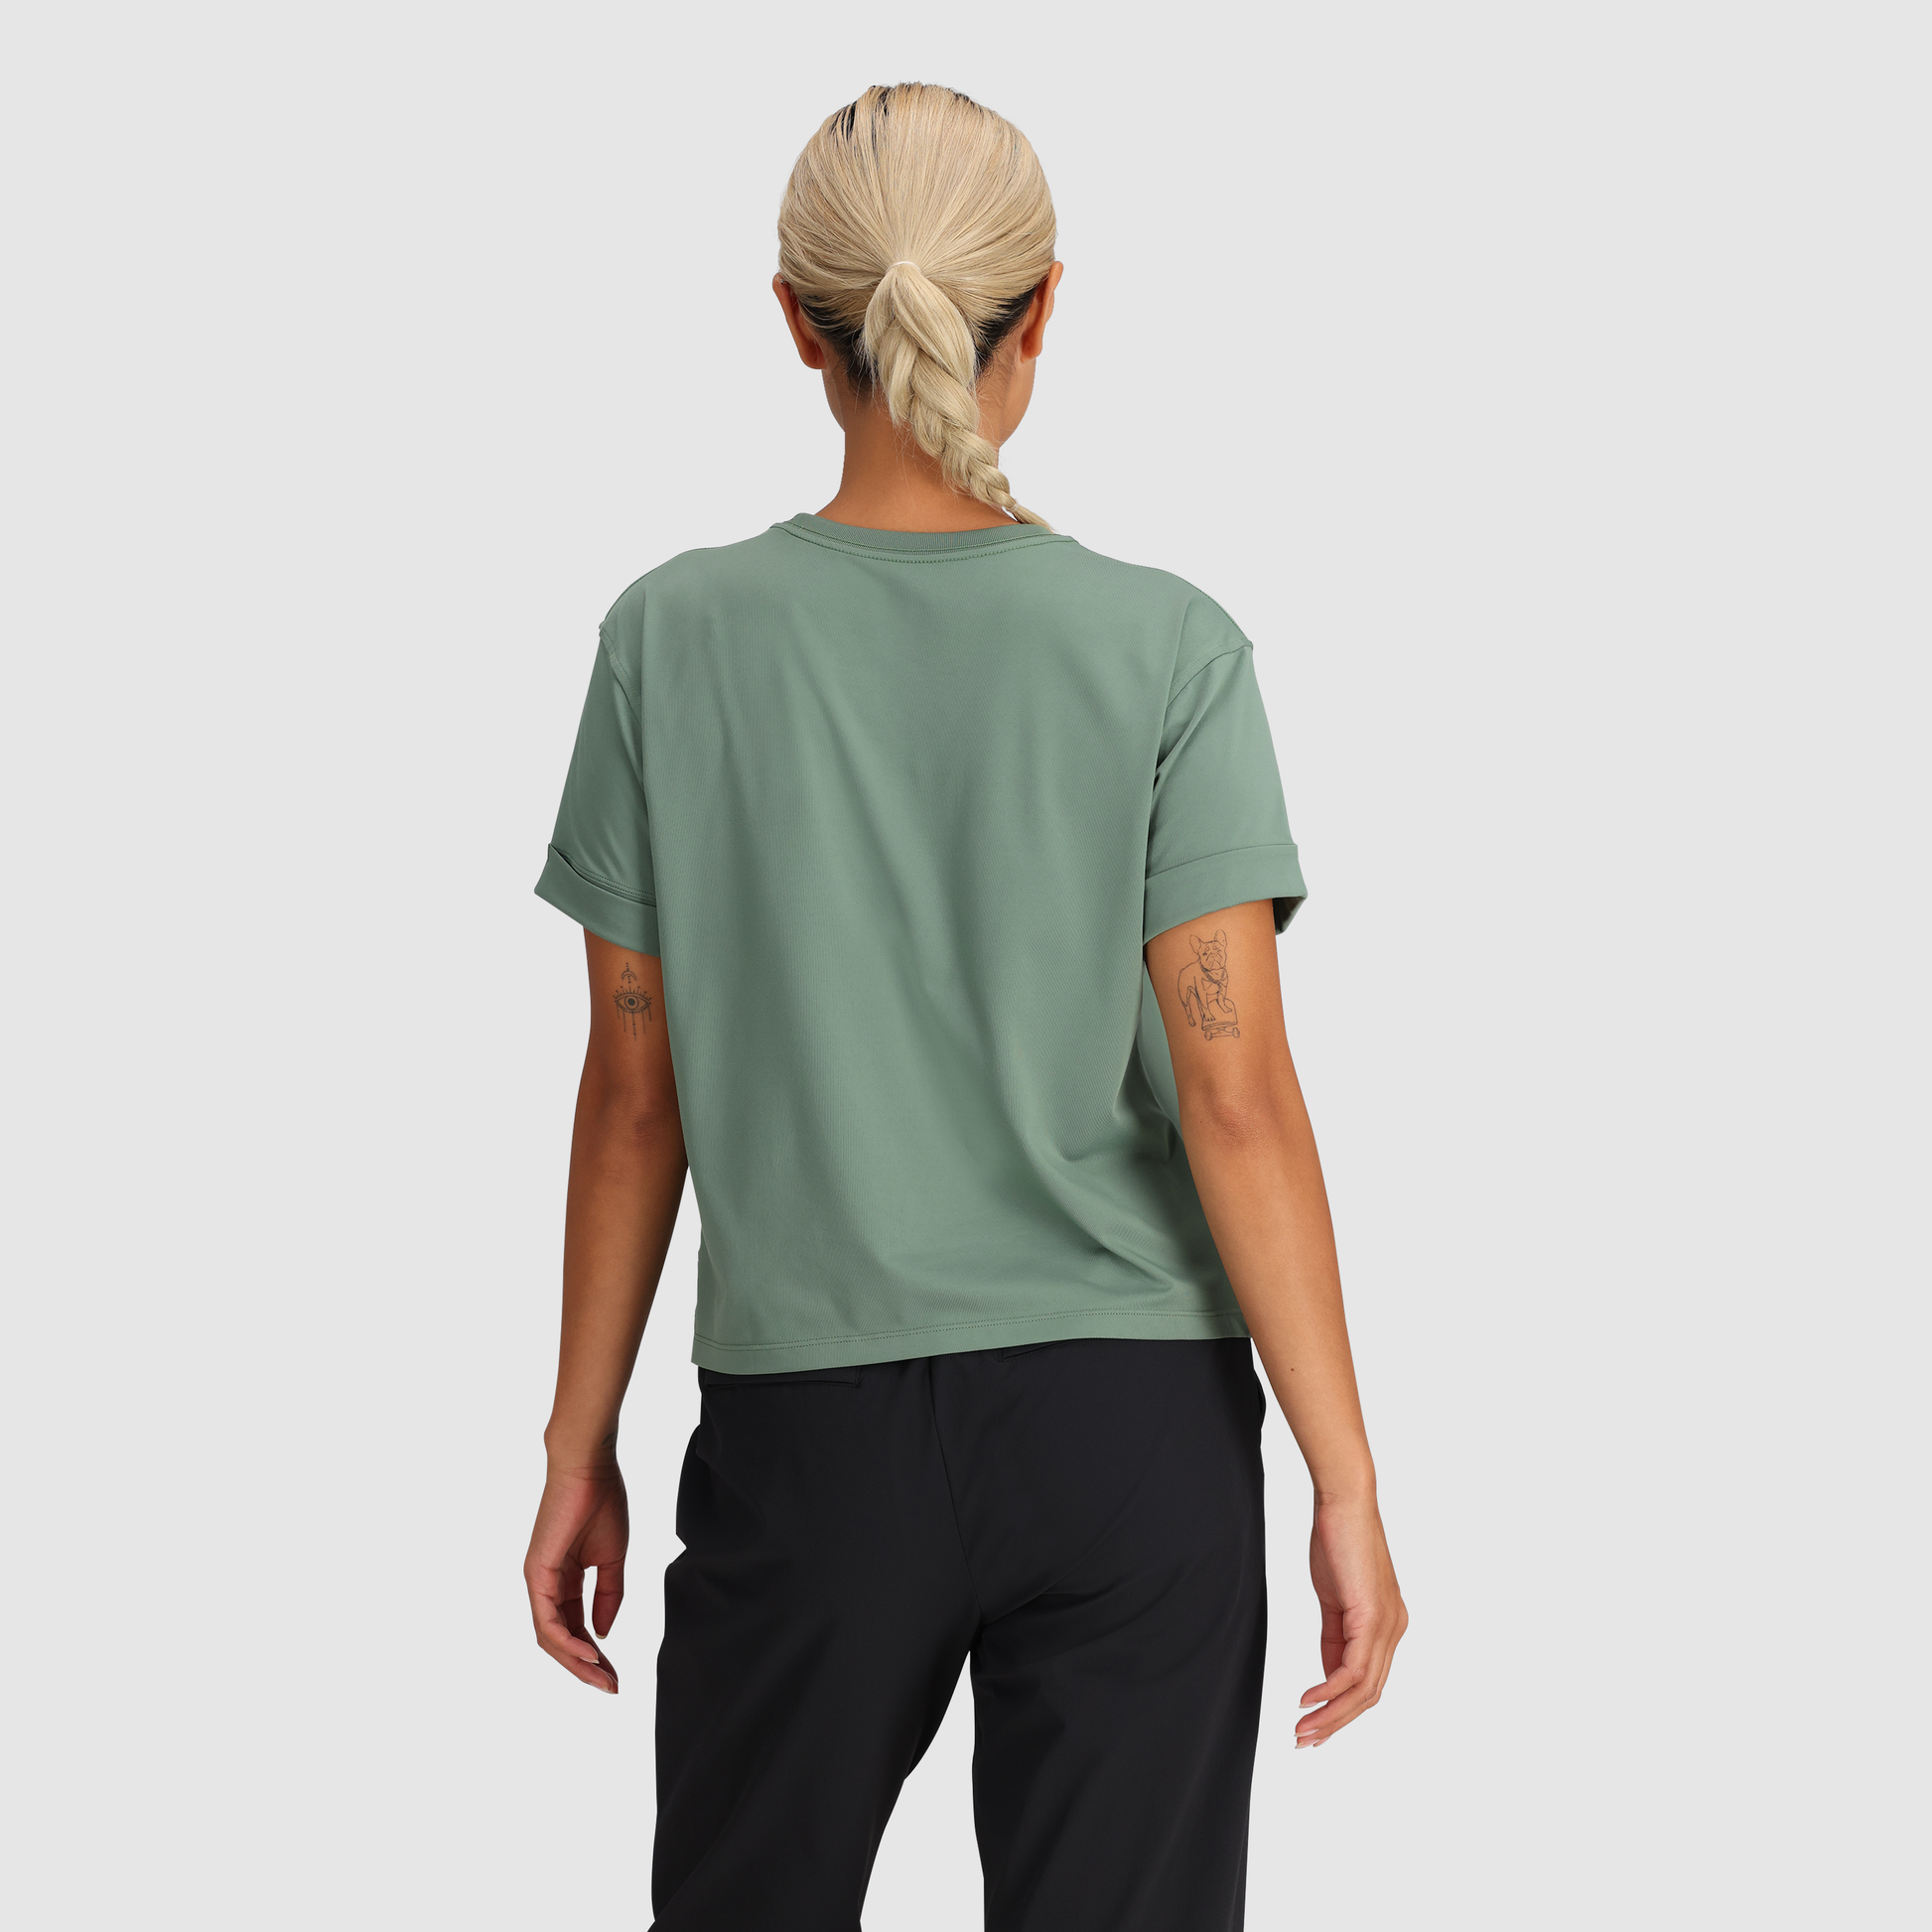 Custom Womens Outdoor/Workout Dry Fast Tee Long Sleeve Yoga